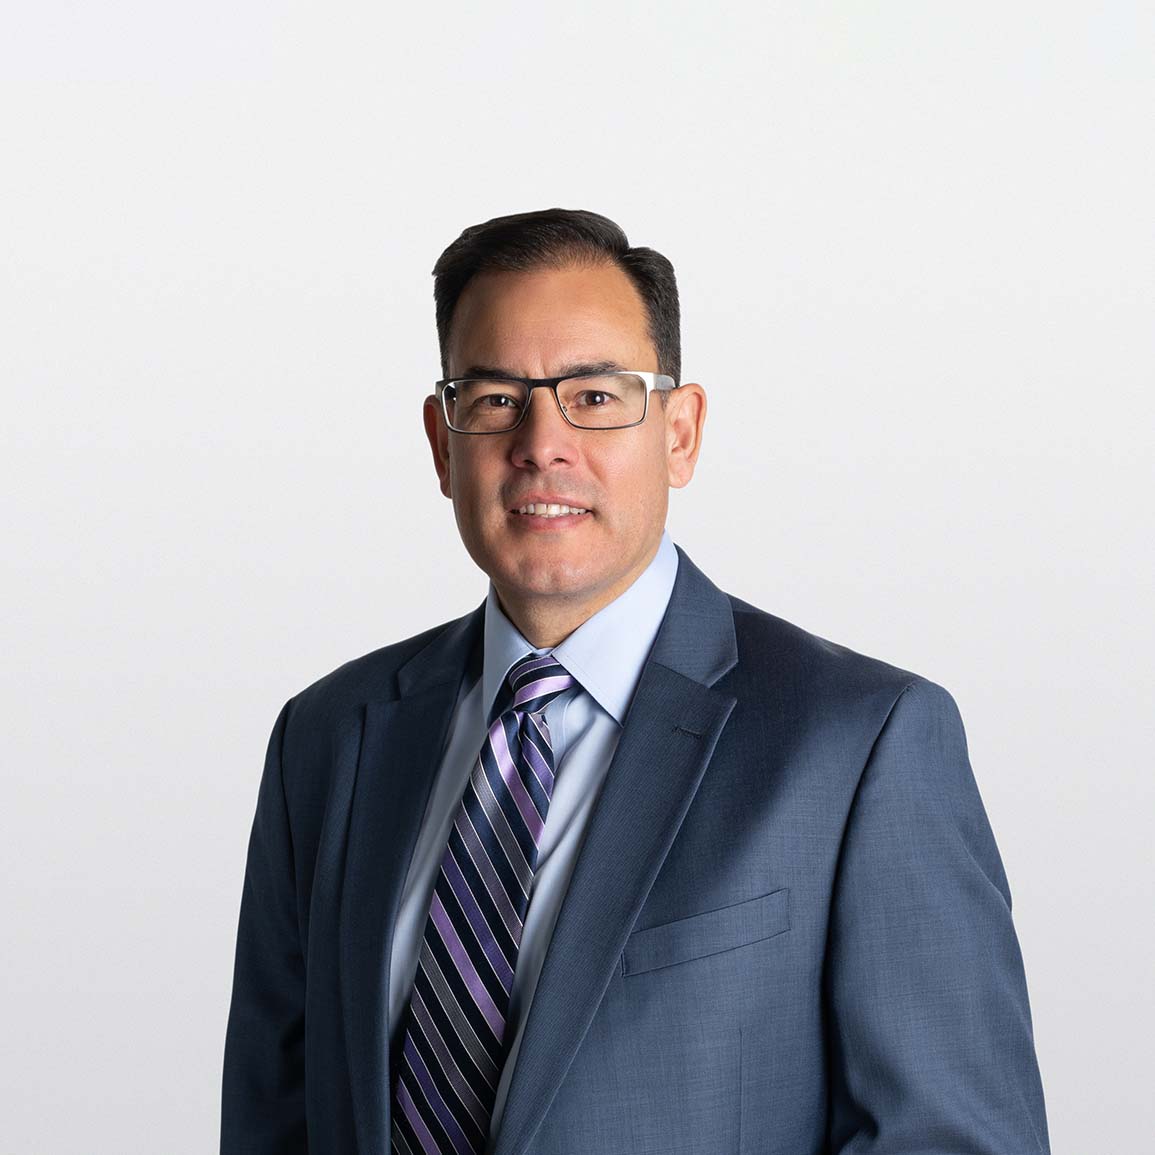 Image of Tony Baumgartner Senior Private Banking Advisor on white background 